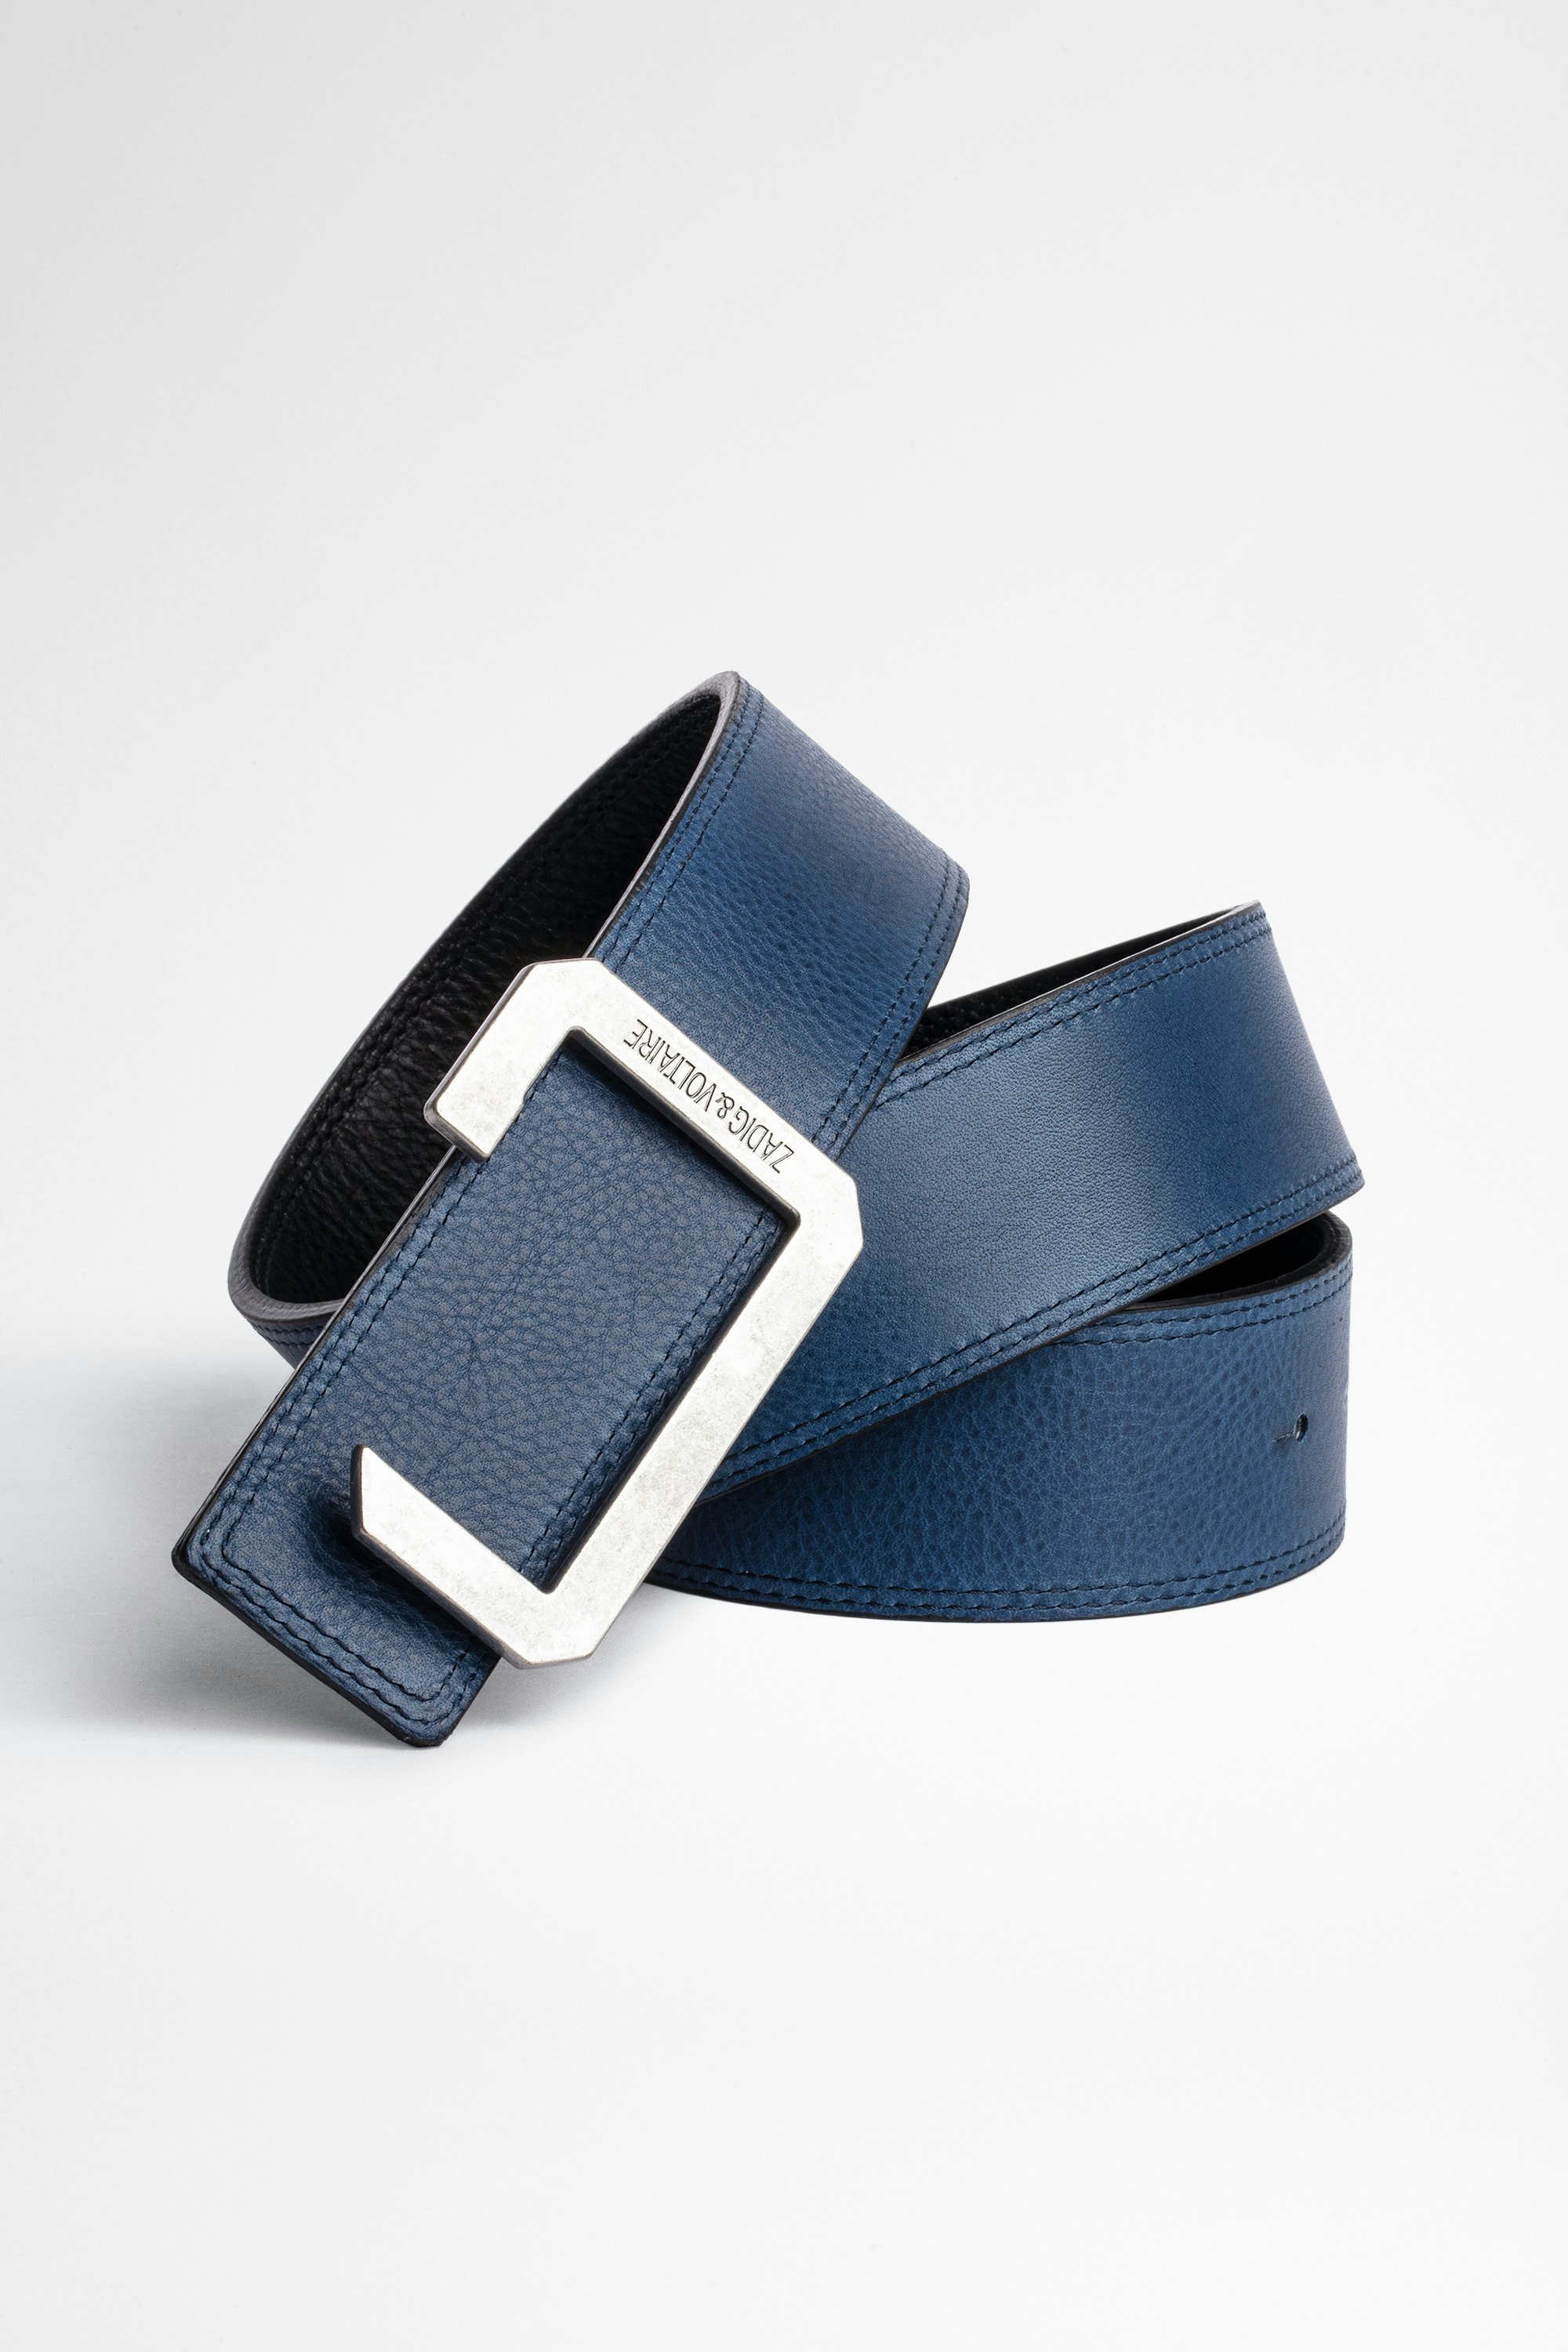 The Reversible レザーベルト Men's reversible leather belt